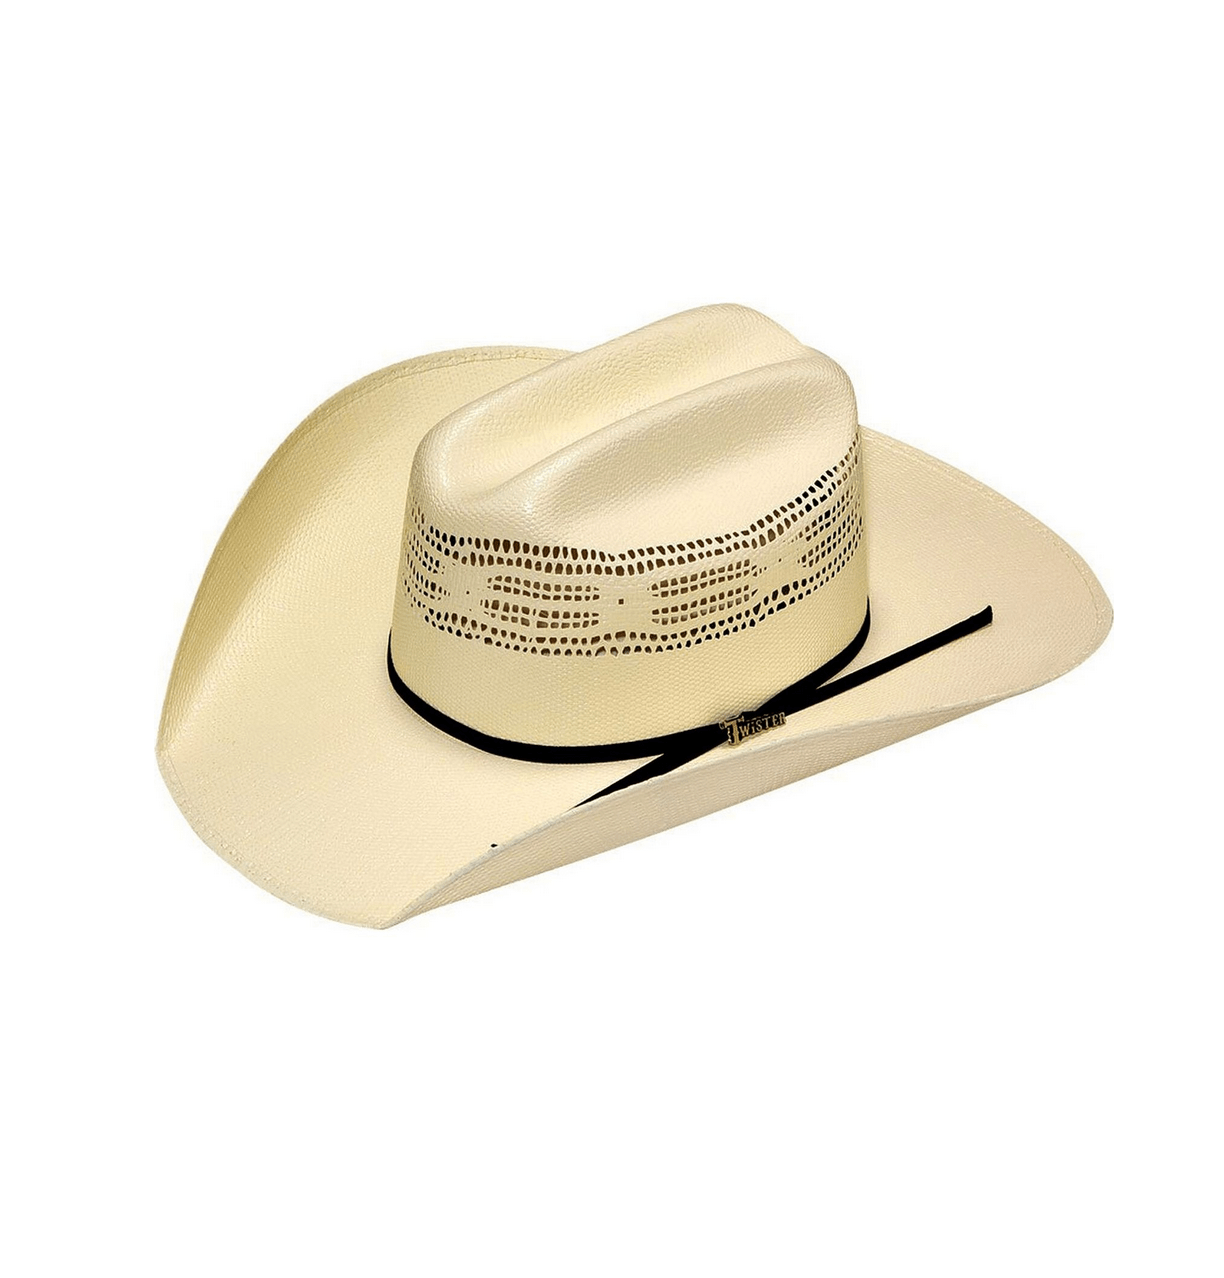 M&F WESTERN Hats M&F Western Men's Twister Bangora Straw Cowboy Hat T71800